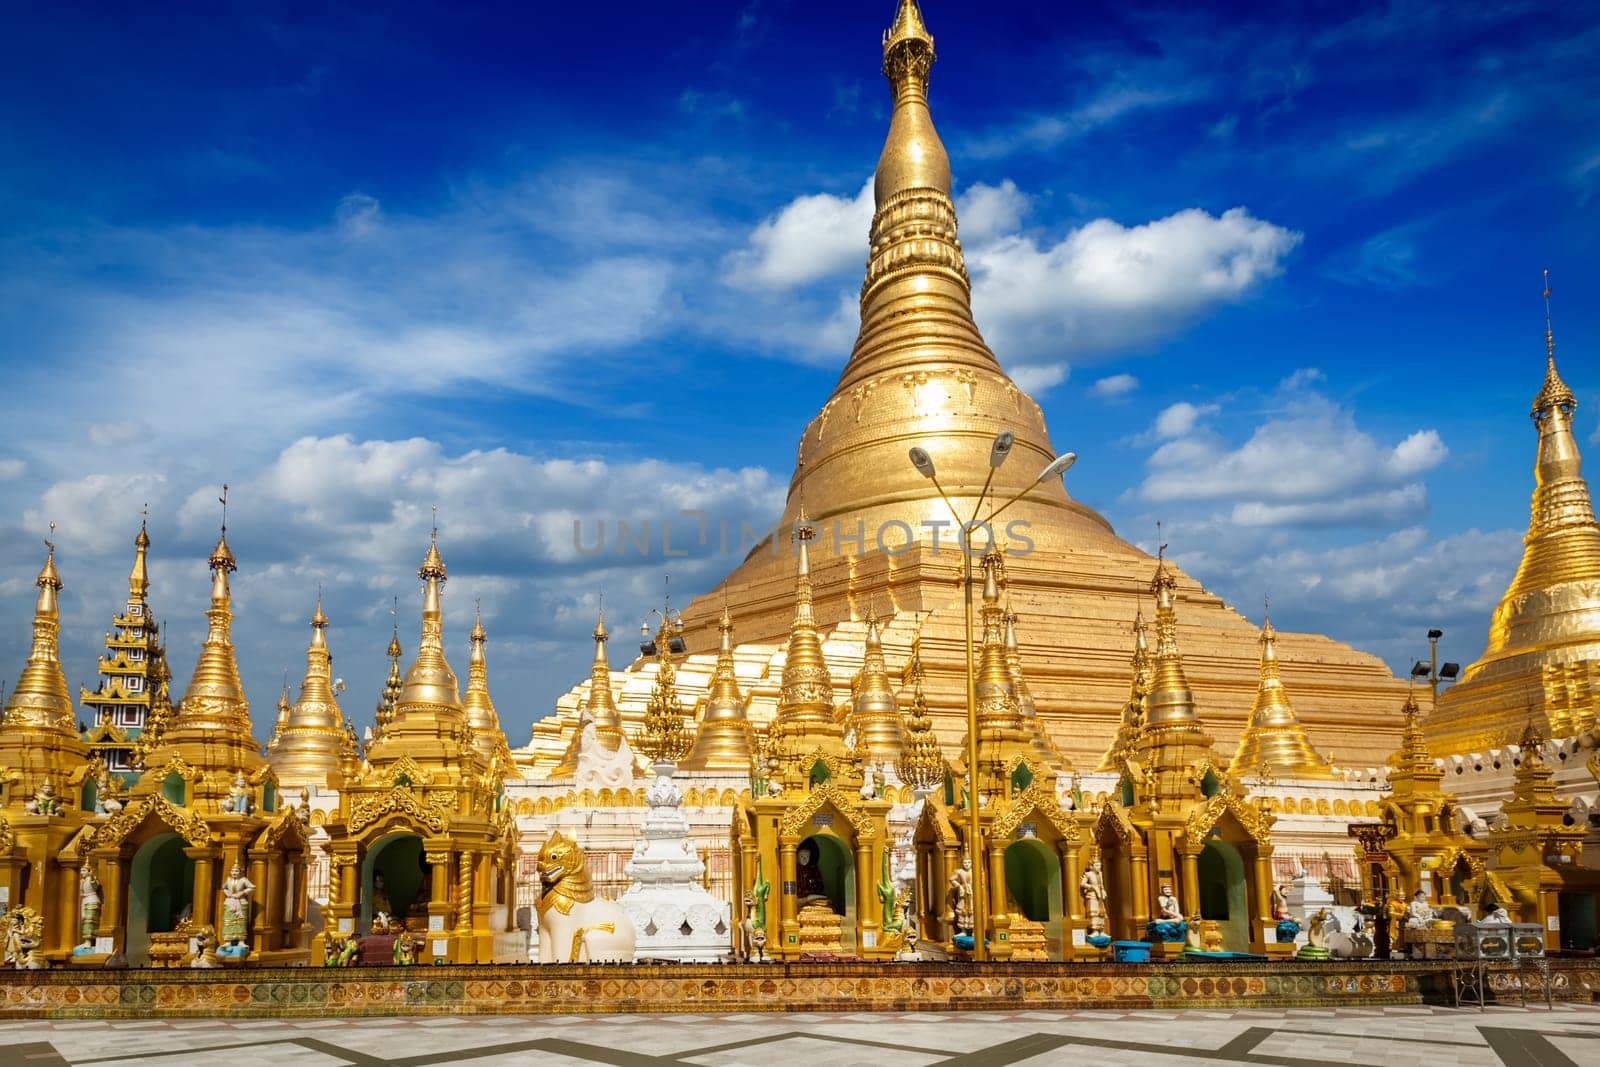 Shwedagon pagoda in Yangon, Myanmar by dimol